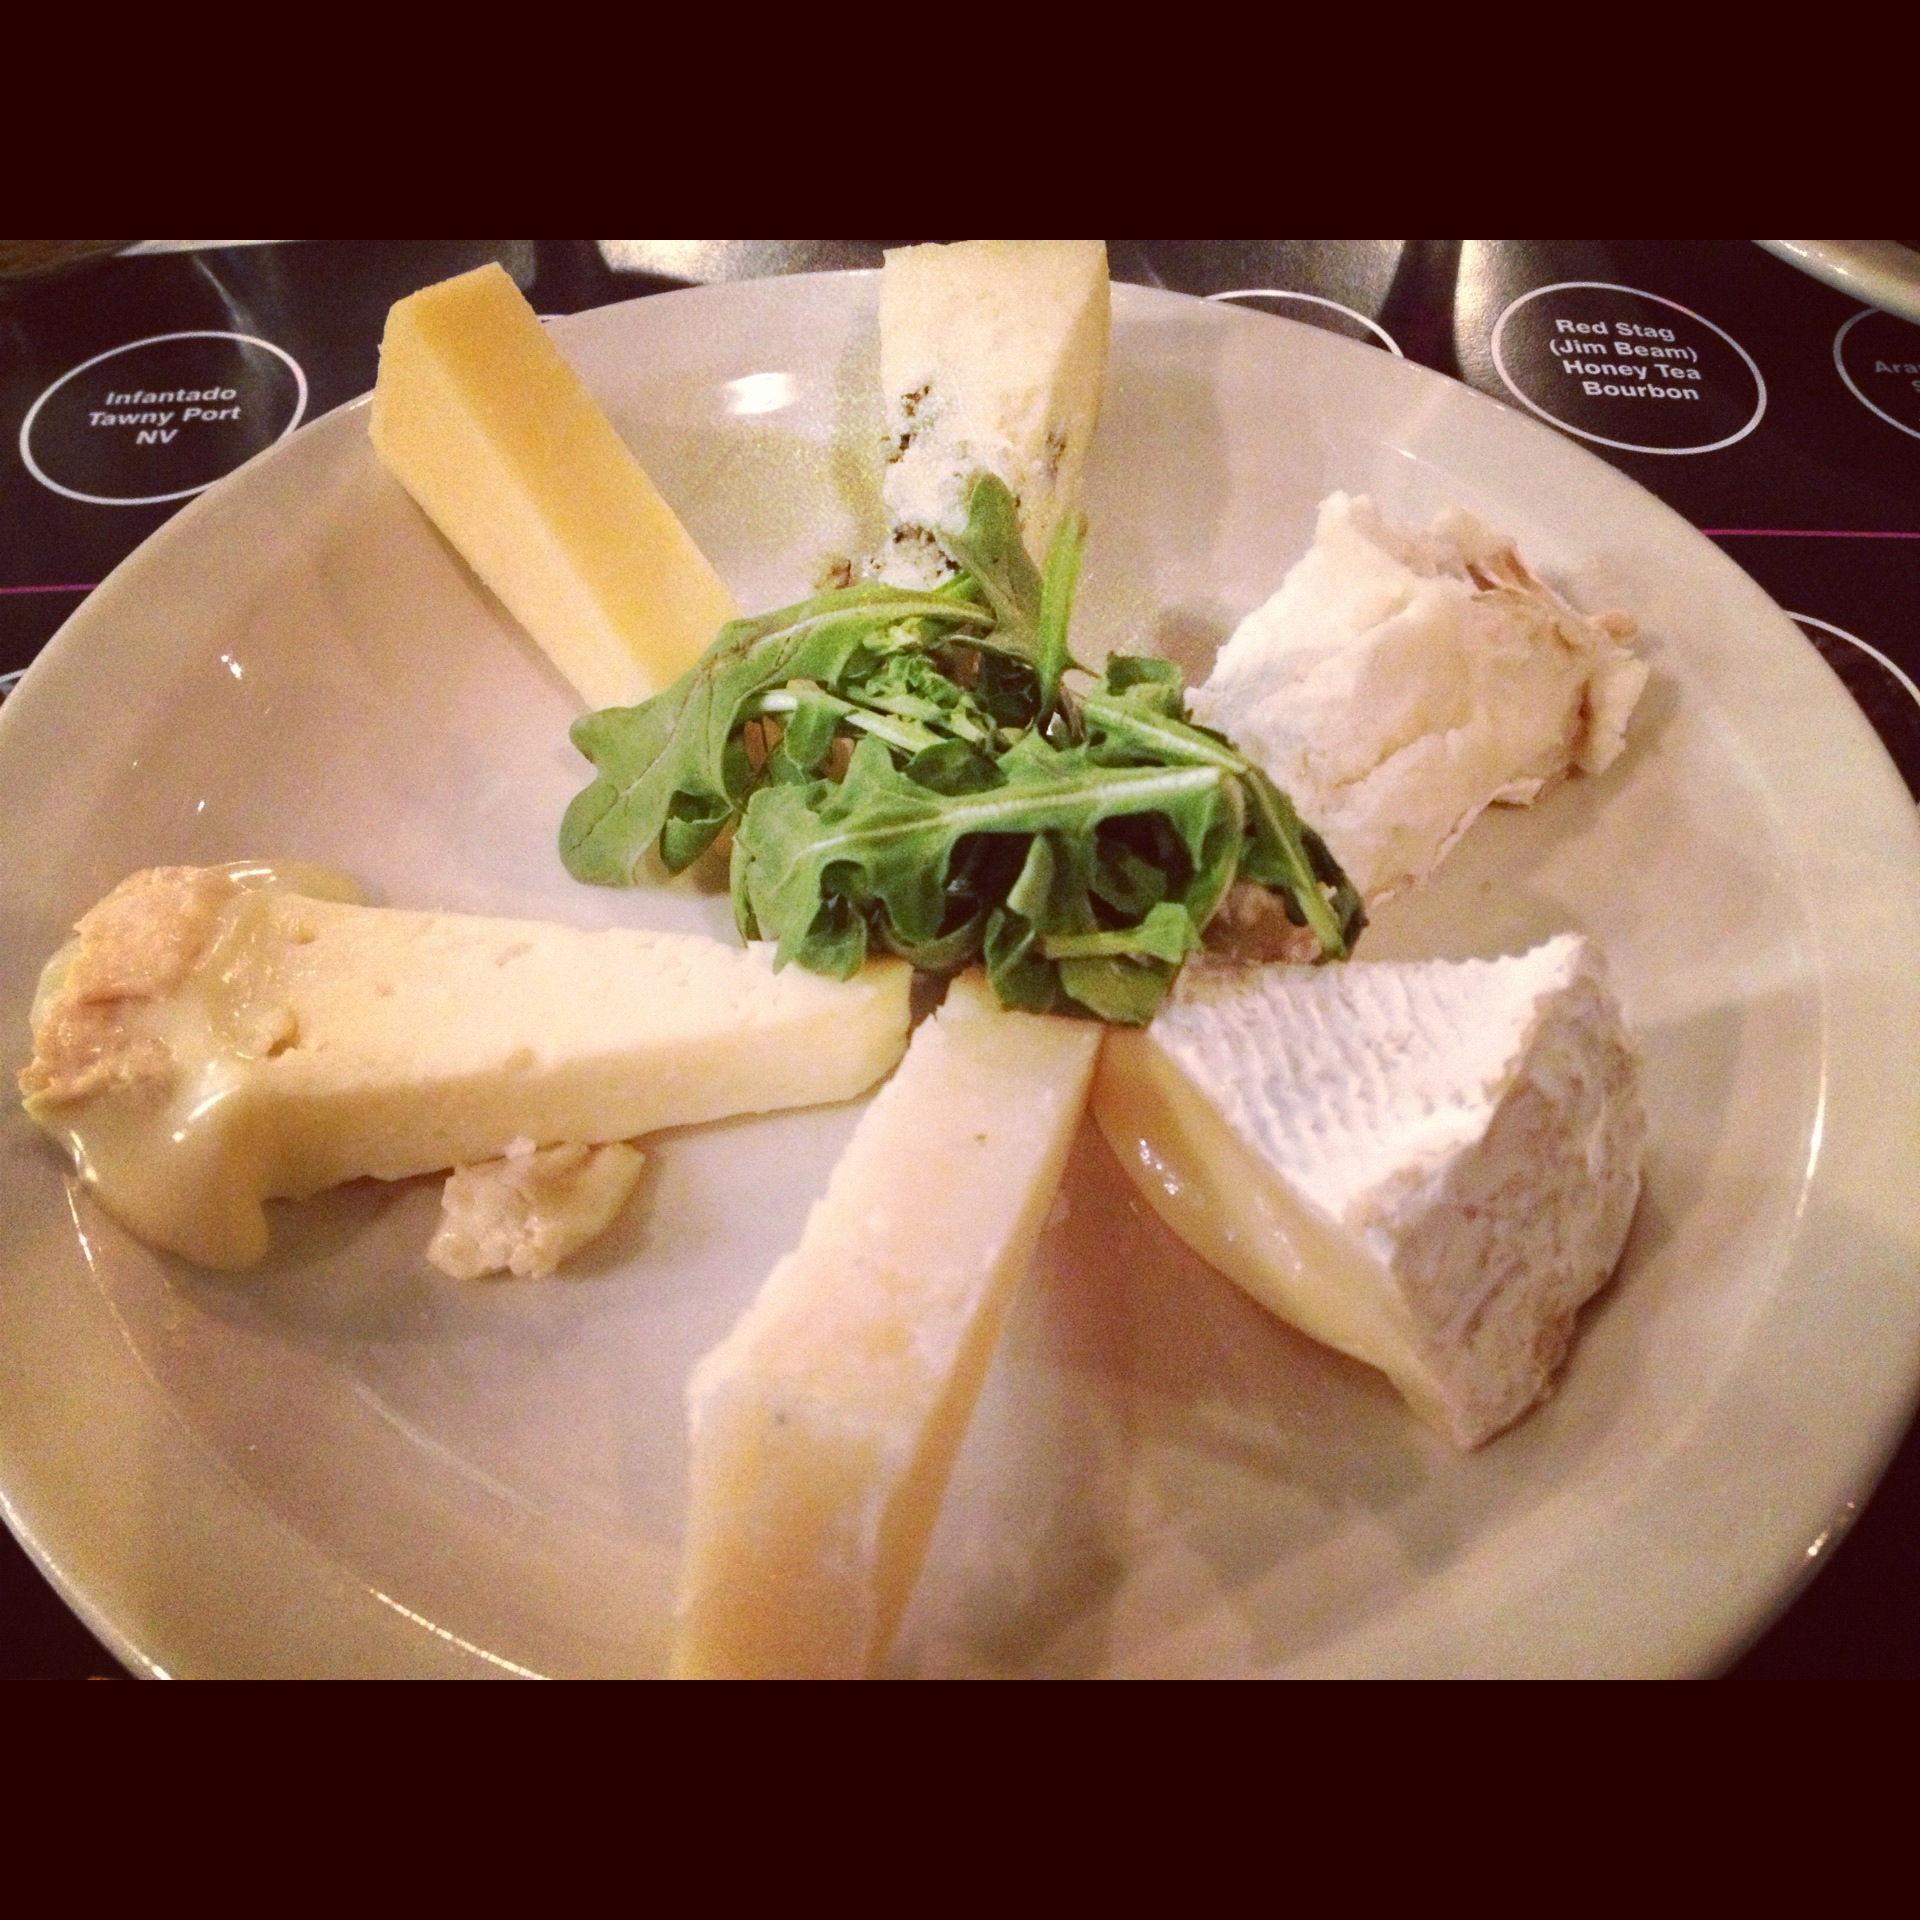 cheese sampler plate